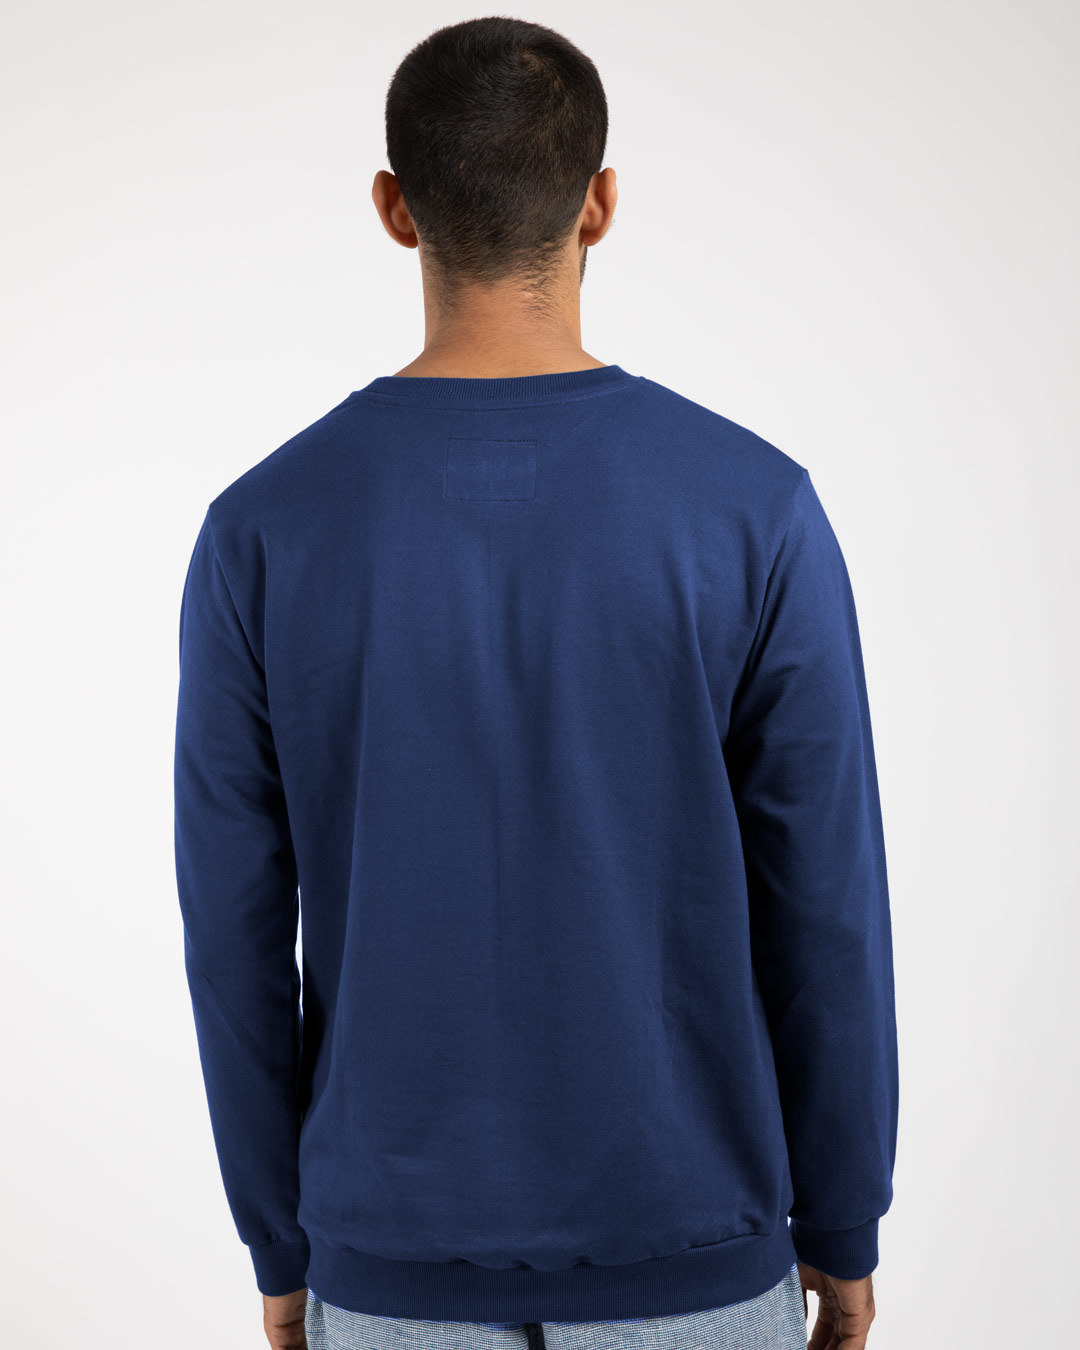 Shop Magneto Fleece Light Sweatshirts (XML)-Back